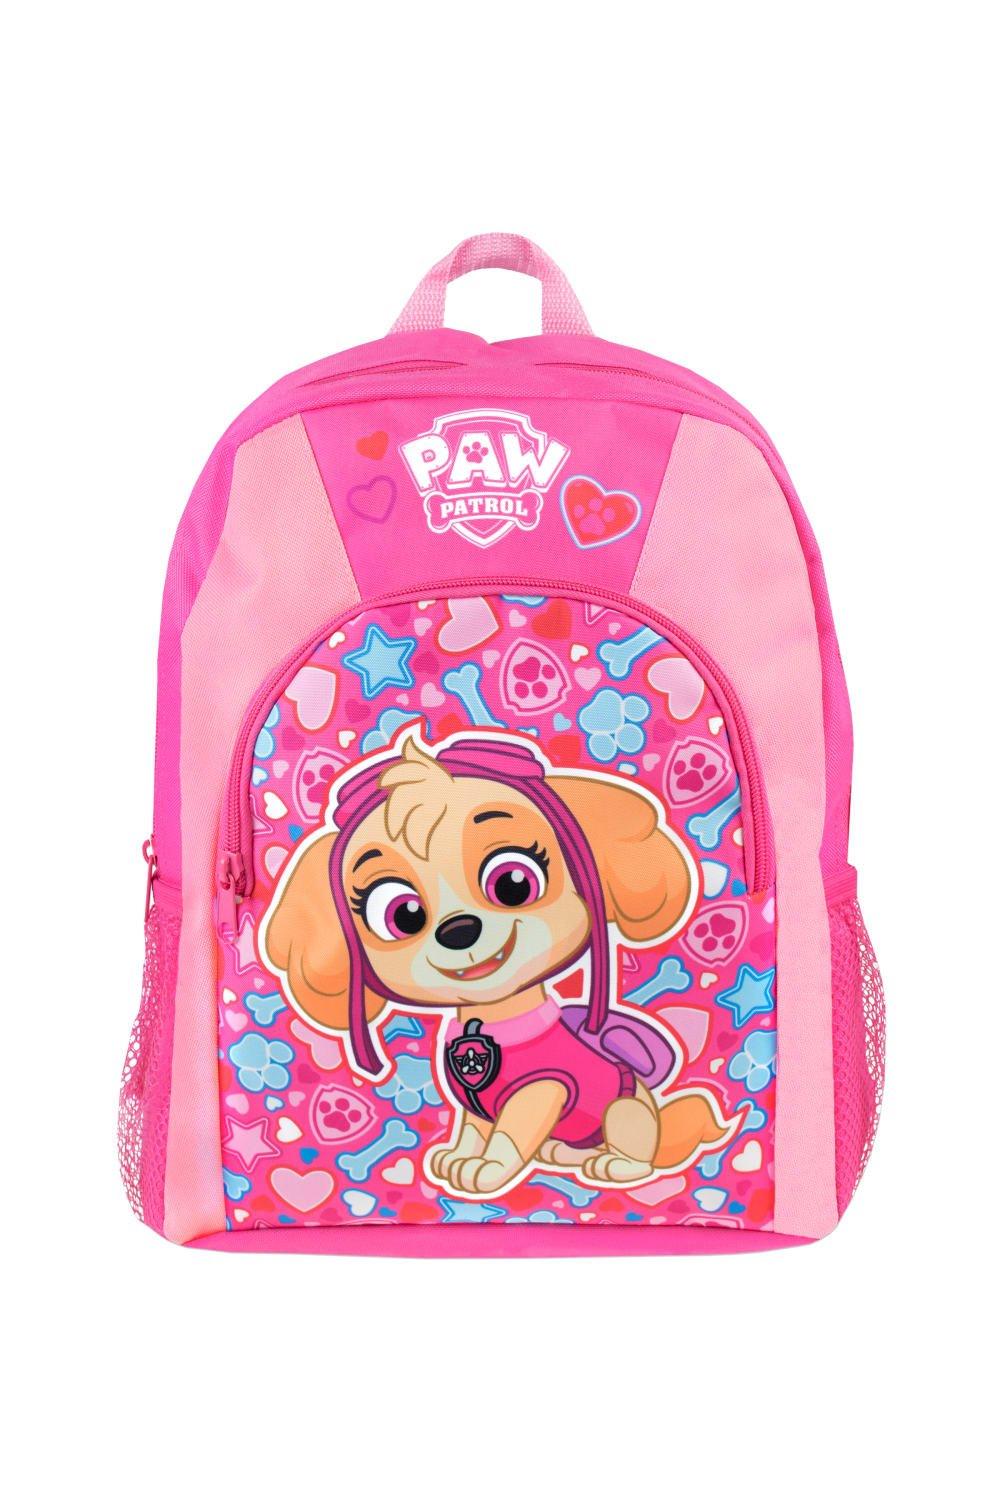 Детский рюкзак Skye Paw Patrol, розовый